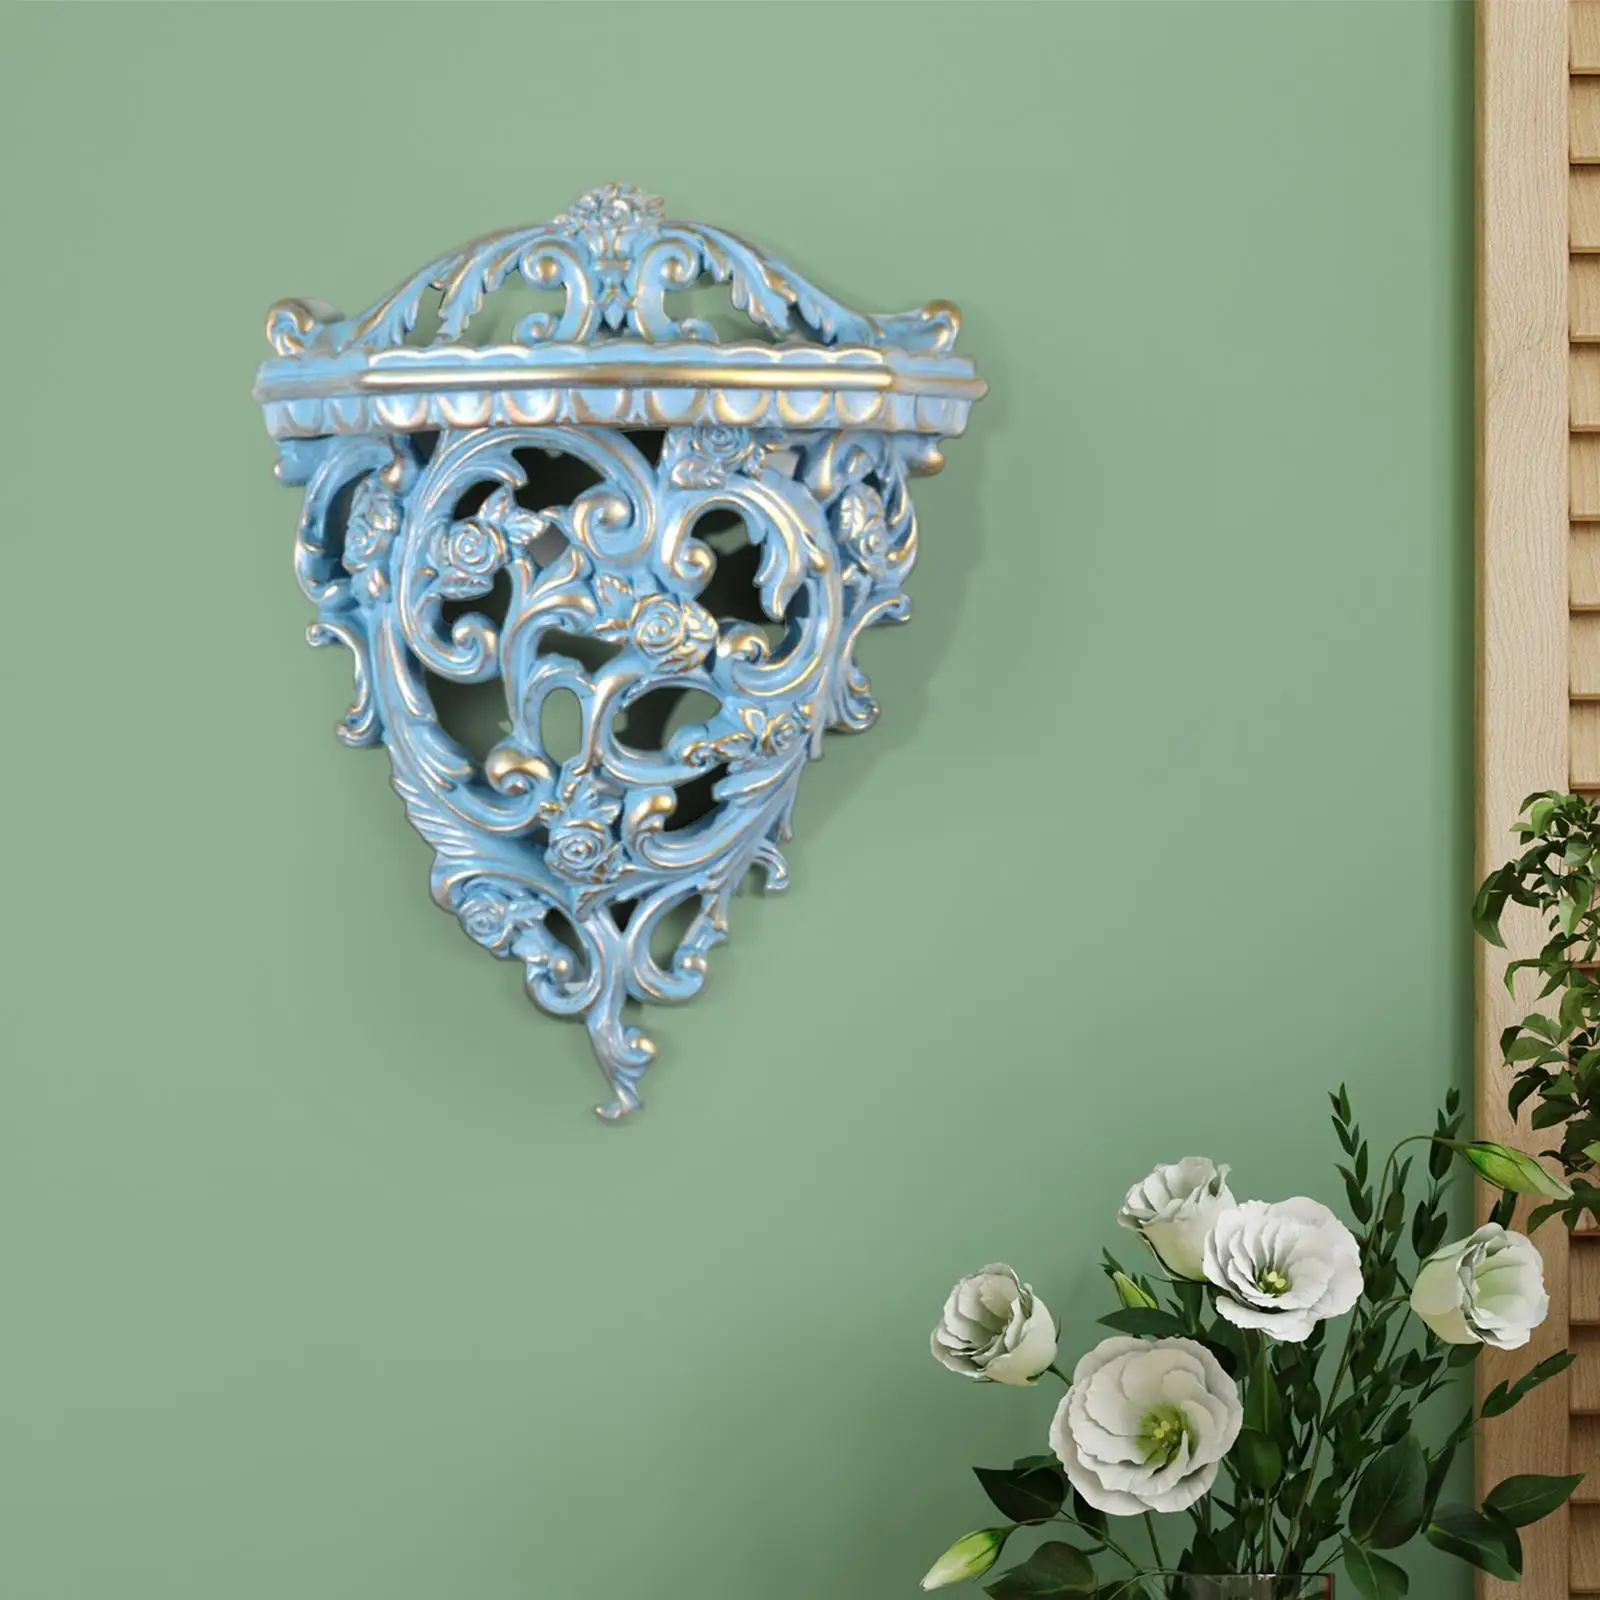 Retro Wall Floating Shelf Decorative Flower Pot Stand Holder for Hallway